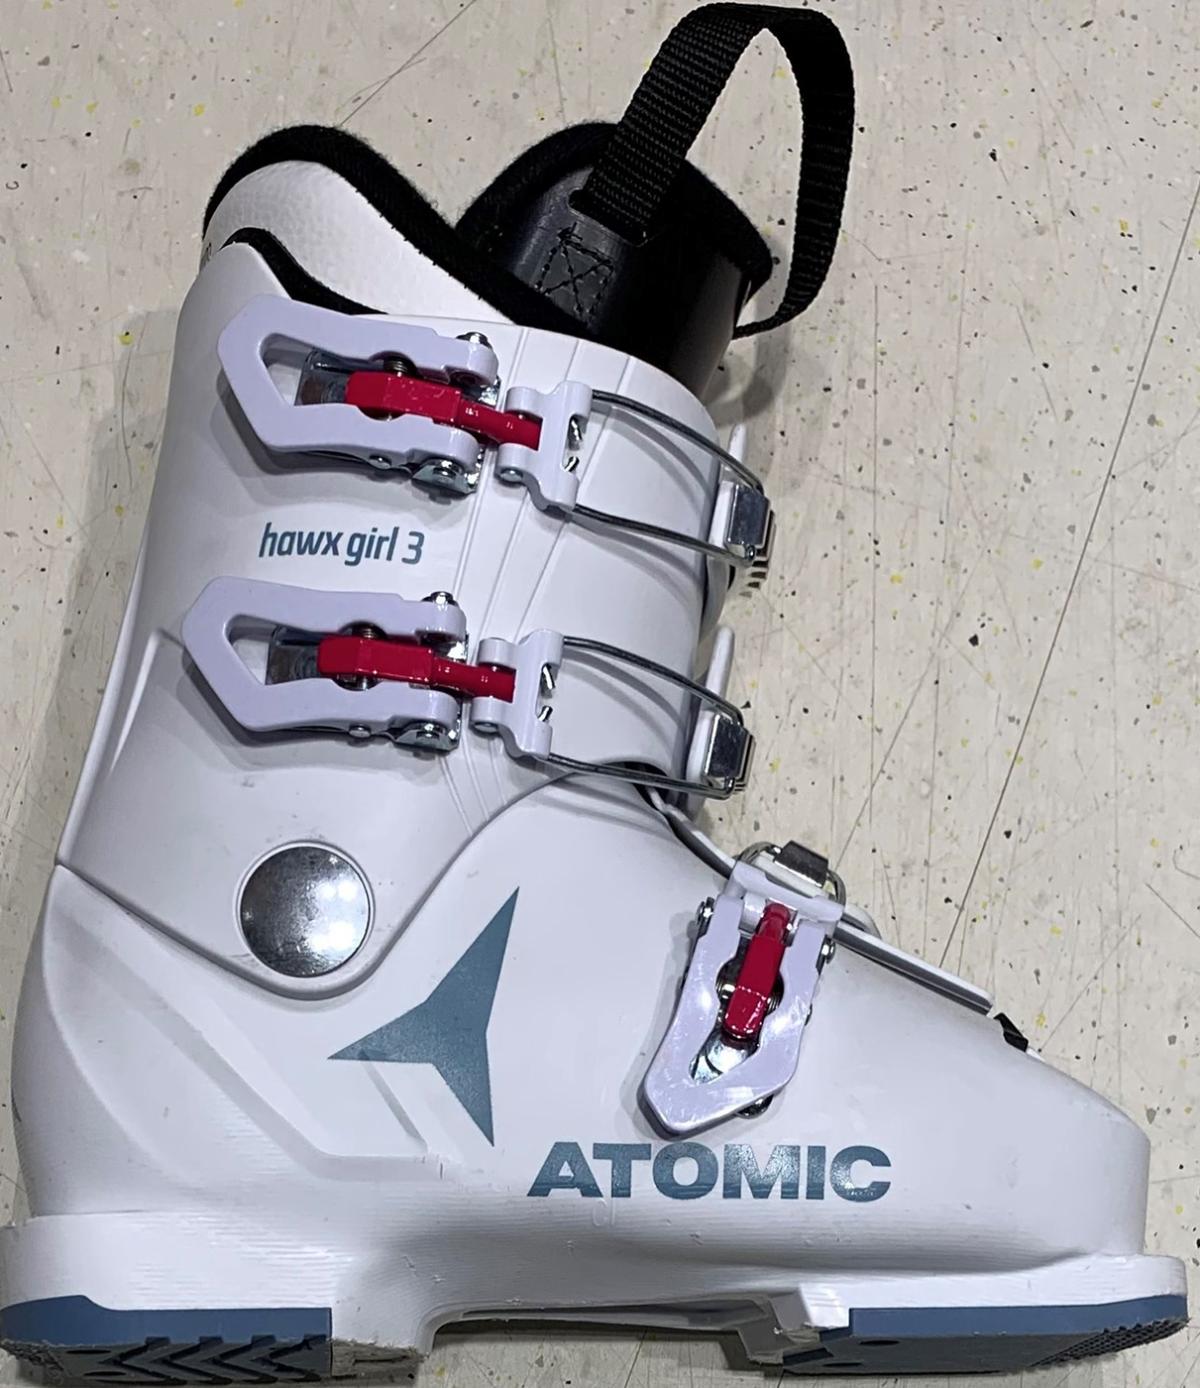 Atomic Hawx Girl 3 used ski boot